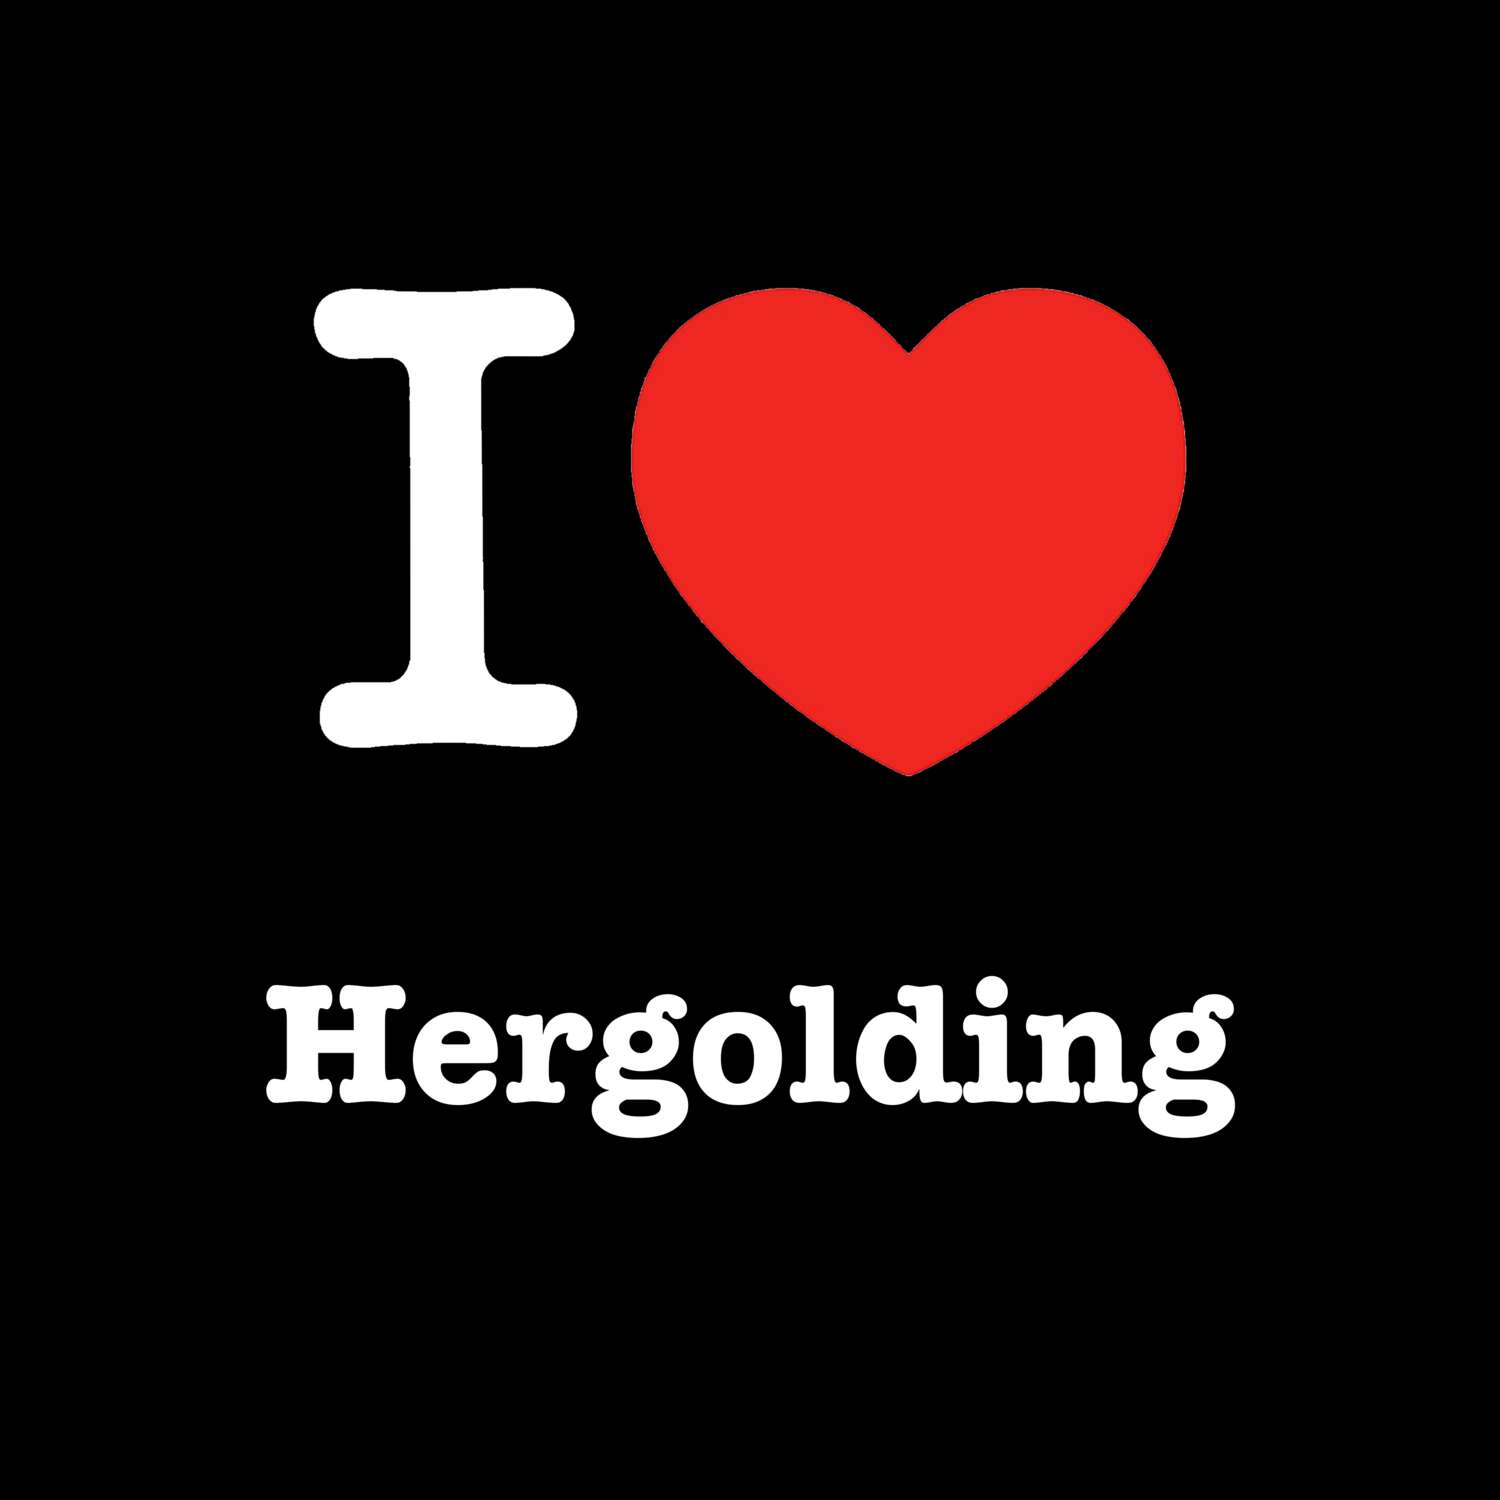 Hergolding T-Shirt »I love«